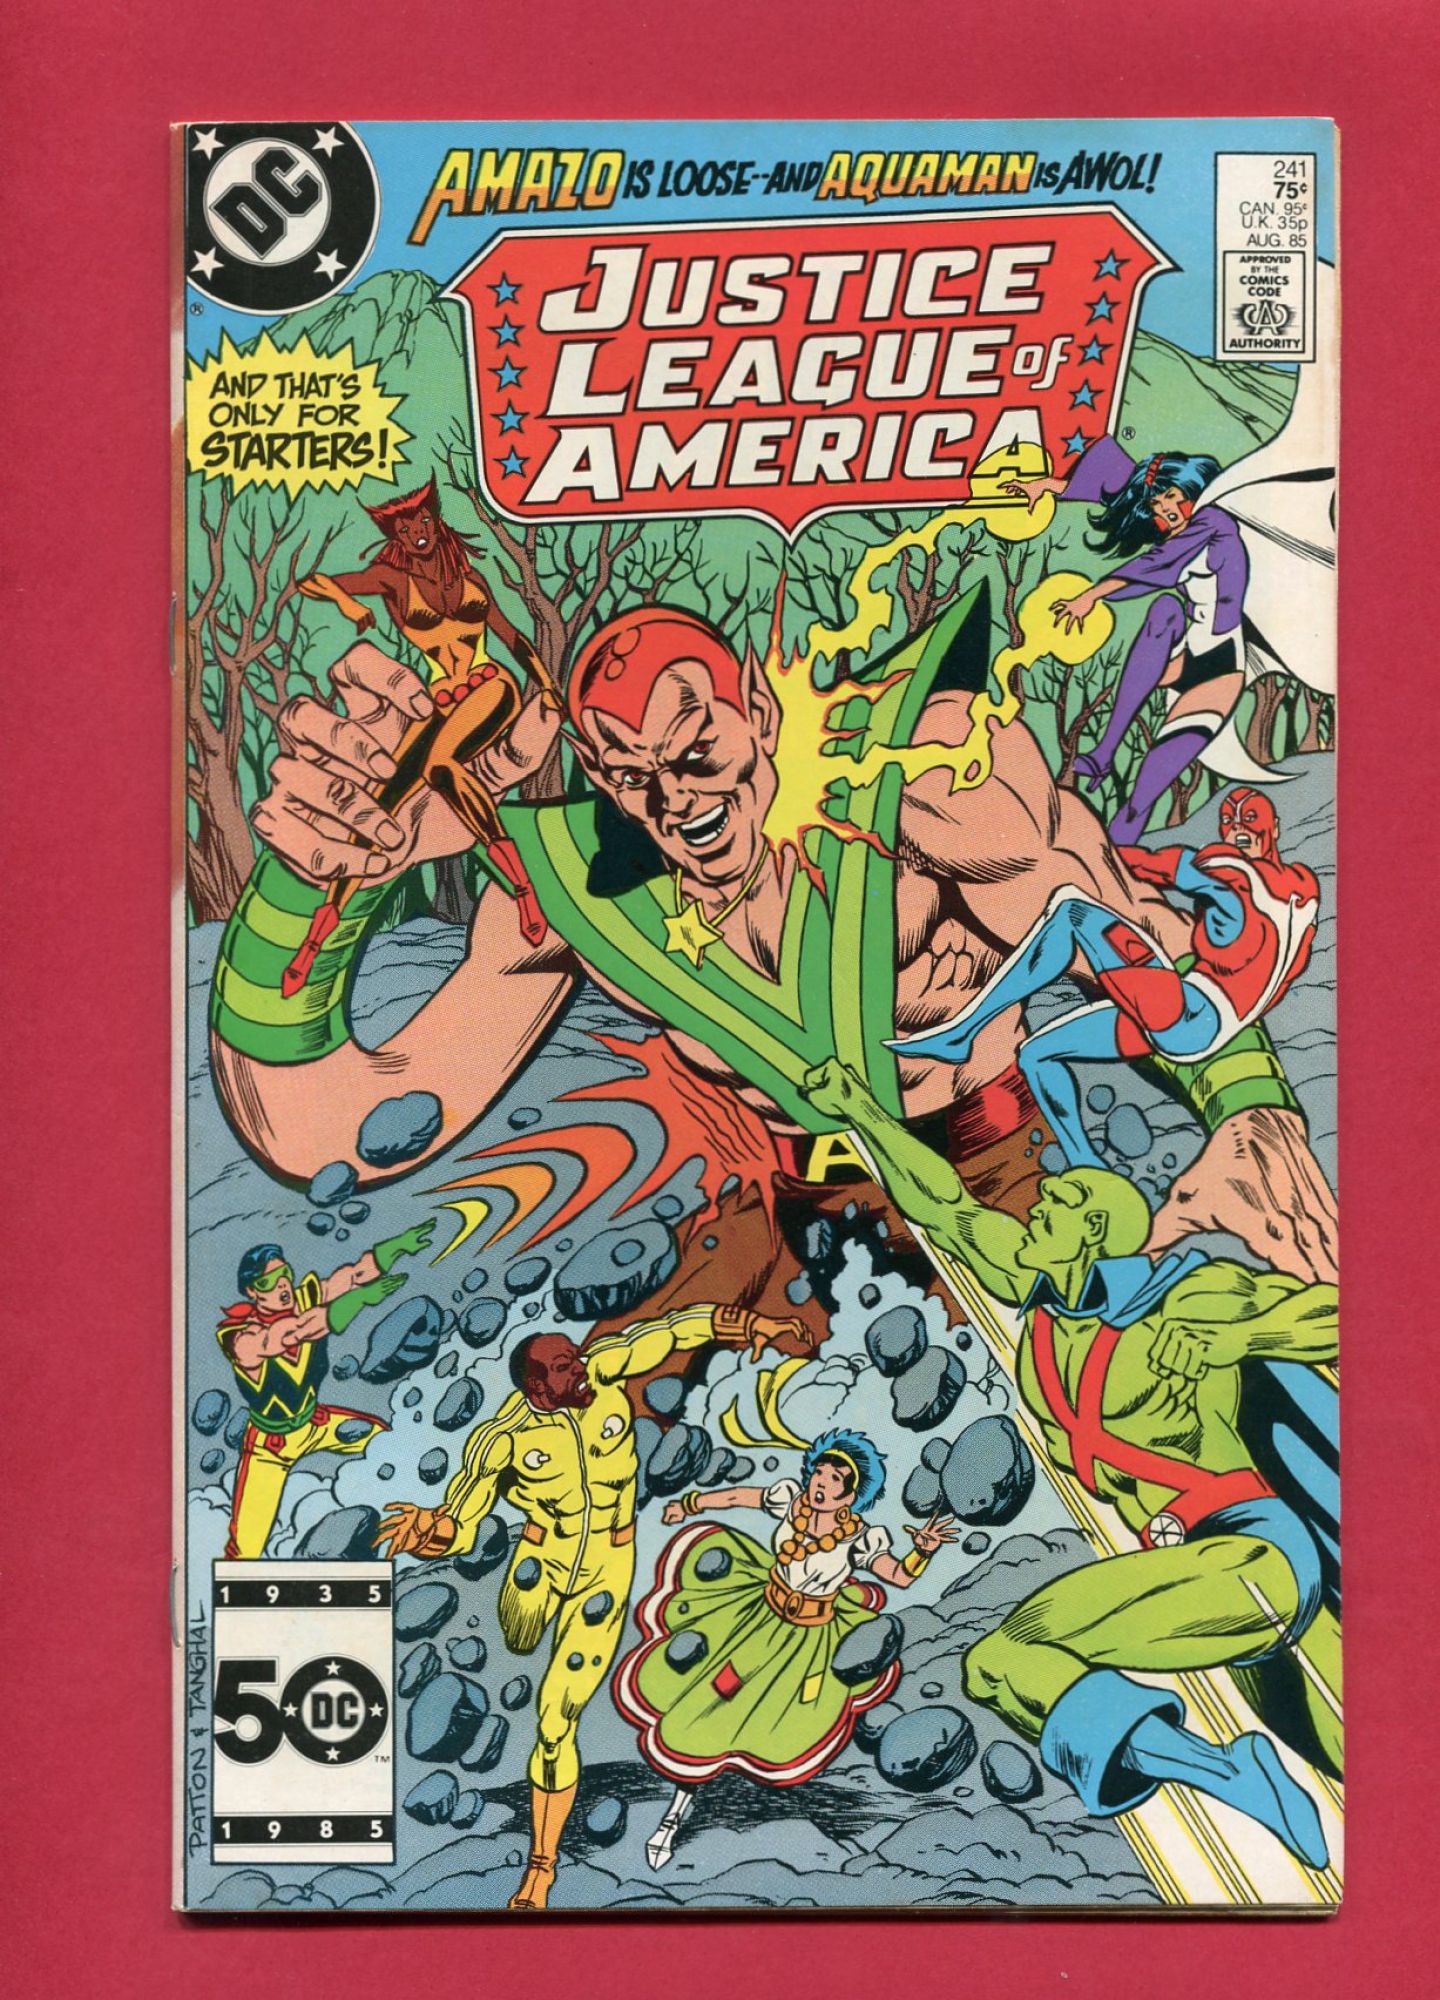 Justice League of America (Volume 1 1960) #241, Aug 1985, 9.2 NM-